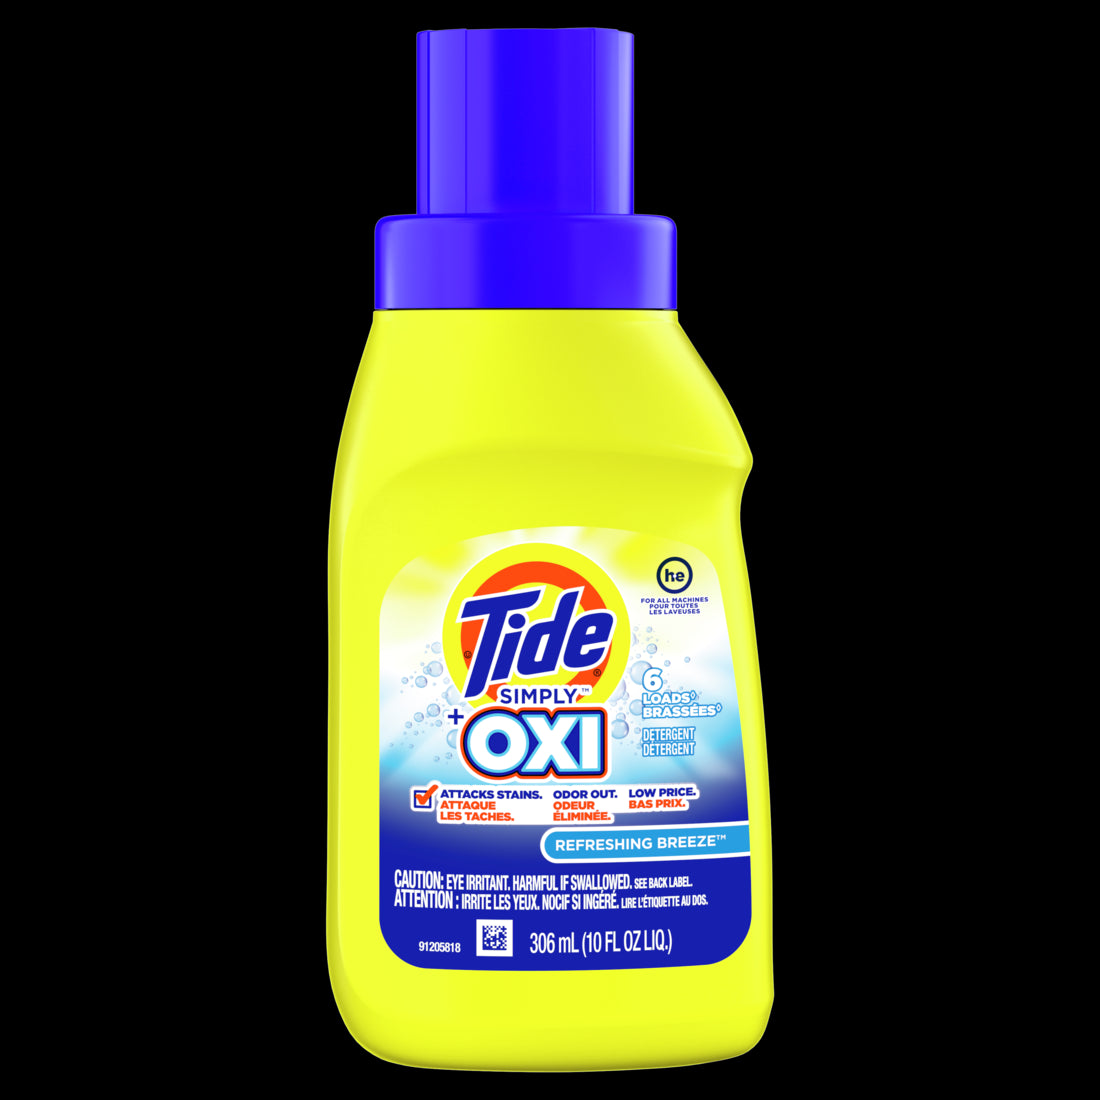 Tide Simply & Oxi Liquid Laundry Detergent Refreshing Breeze - 10oz/12pk